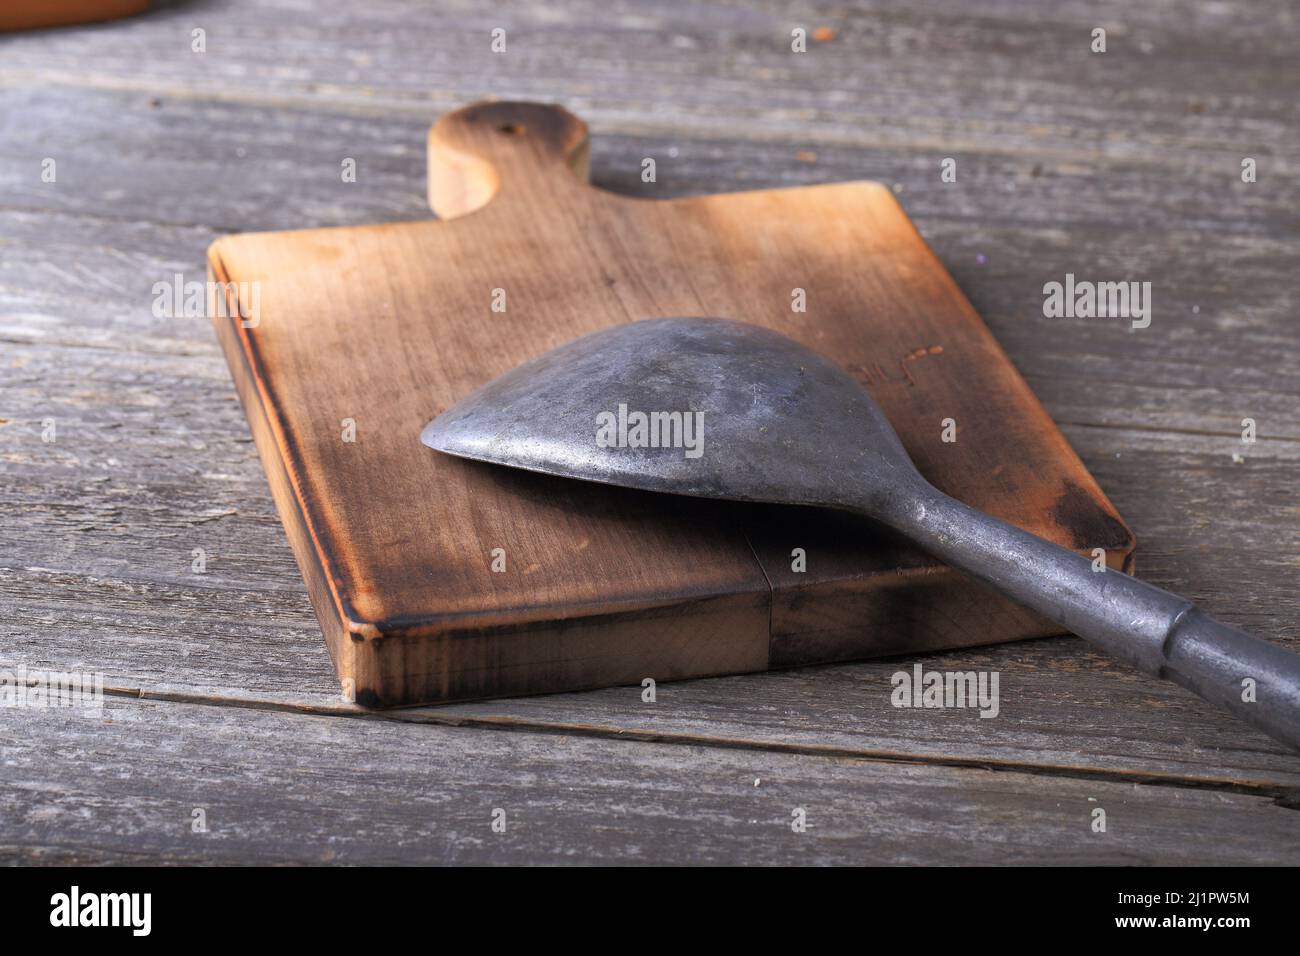 Metal Kitchen Utensil on Wood Cutting Board Stock Photo